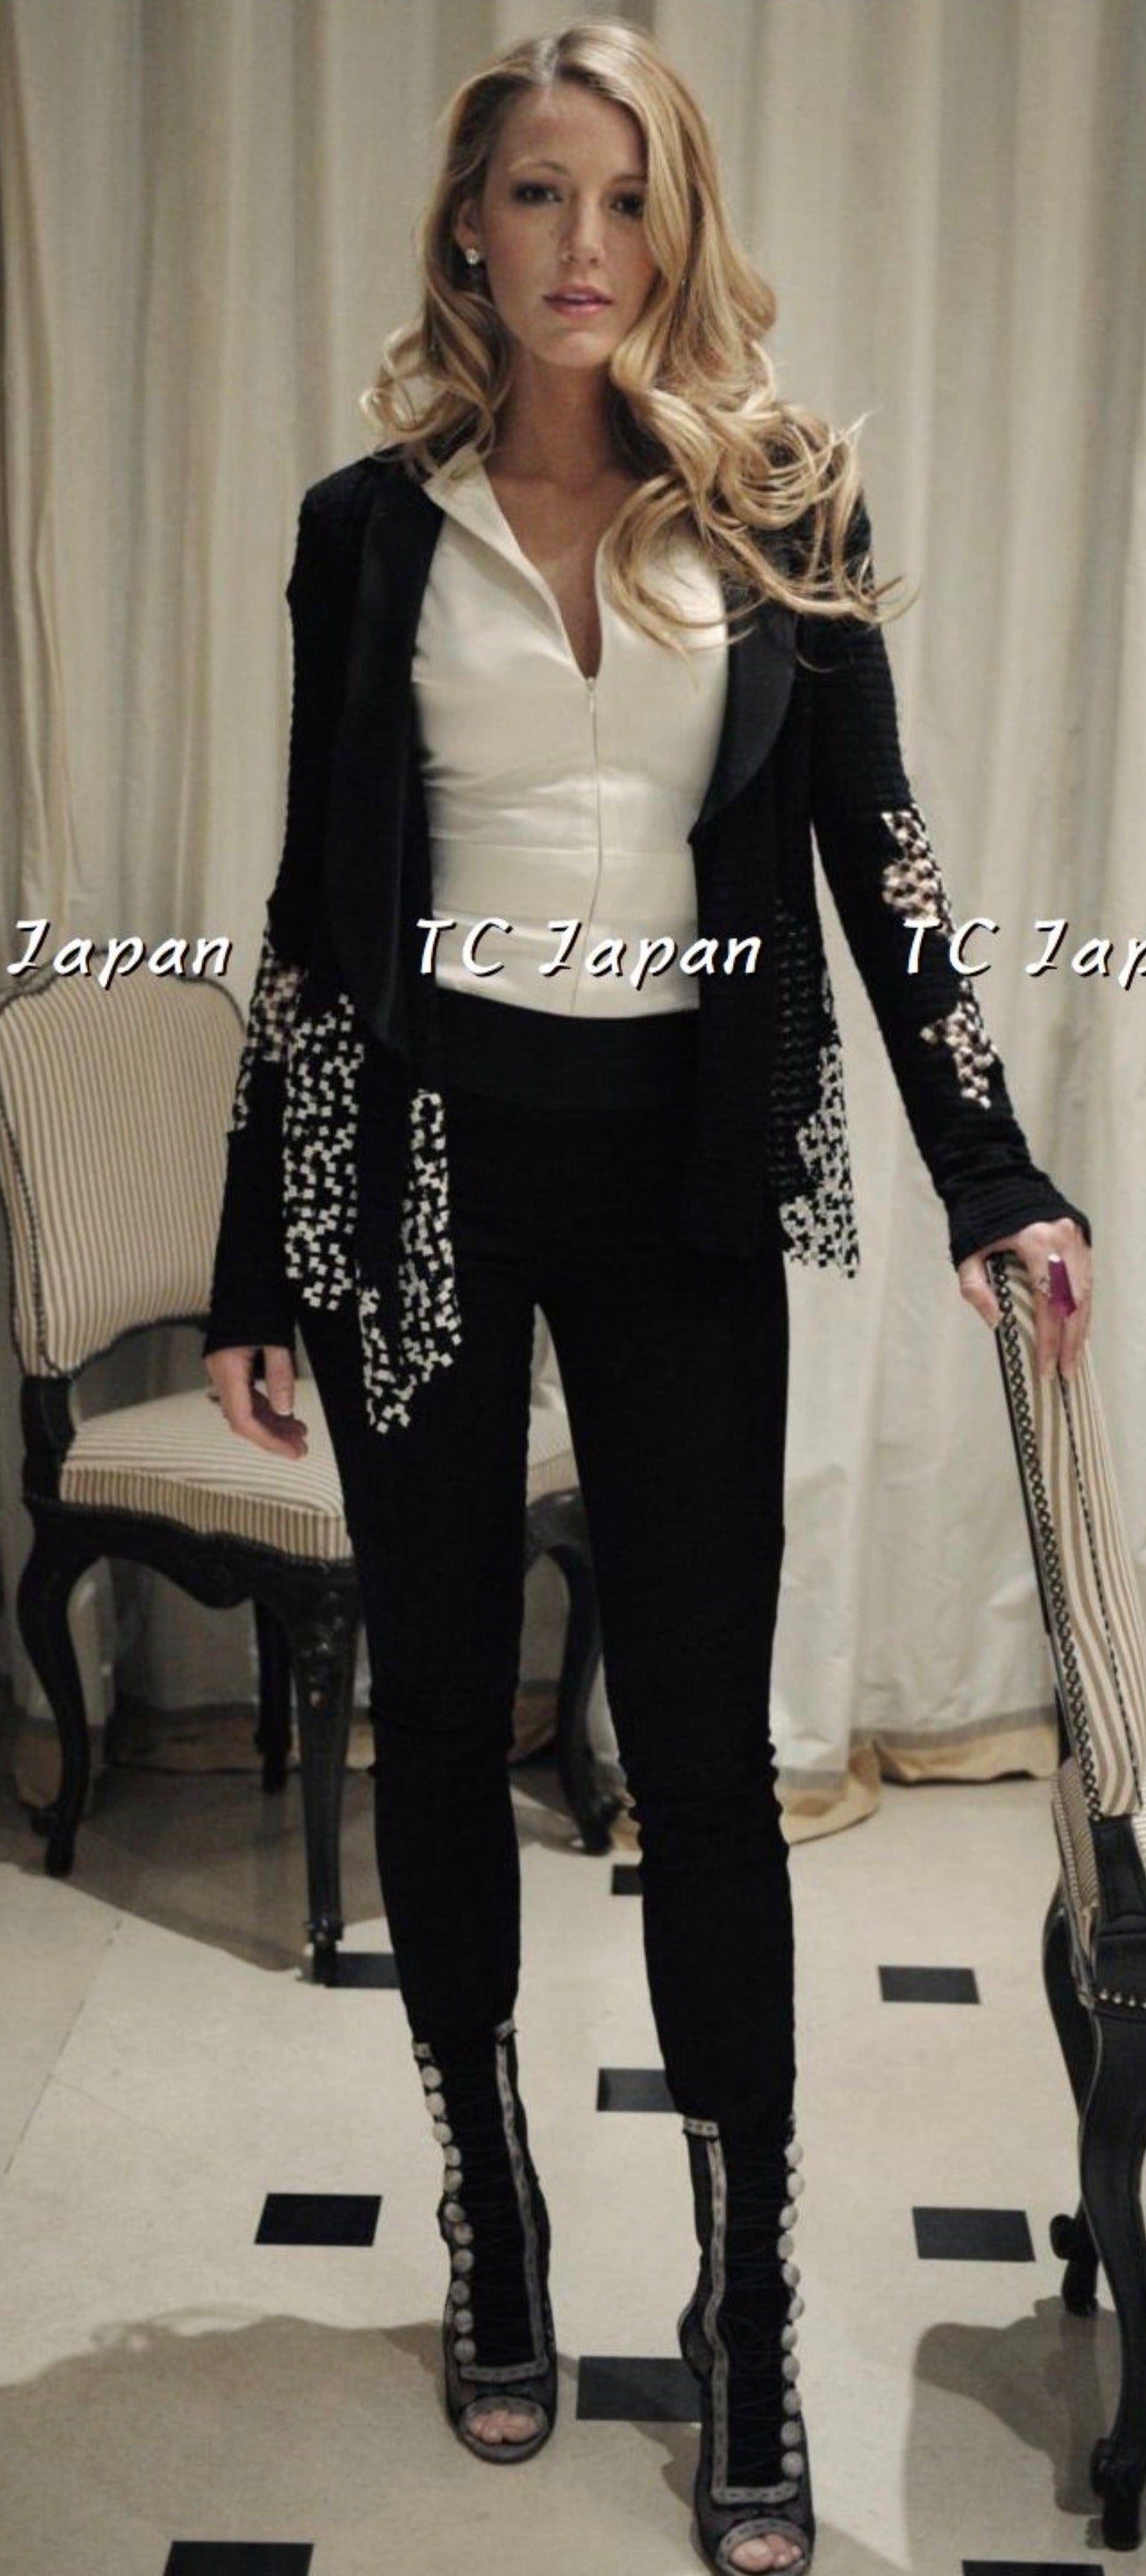 CHANEL 11S Cameron Diaz Black White Lace Cardigan Jacket Dress Tops 34 36 38 40 シャネル ジャケット ワンピース カーディガン 即発 - CHANEL TC JAPAN